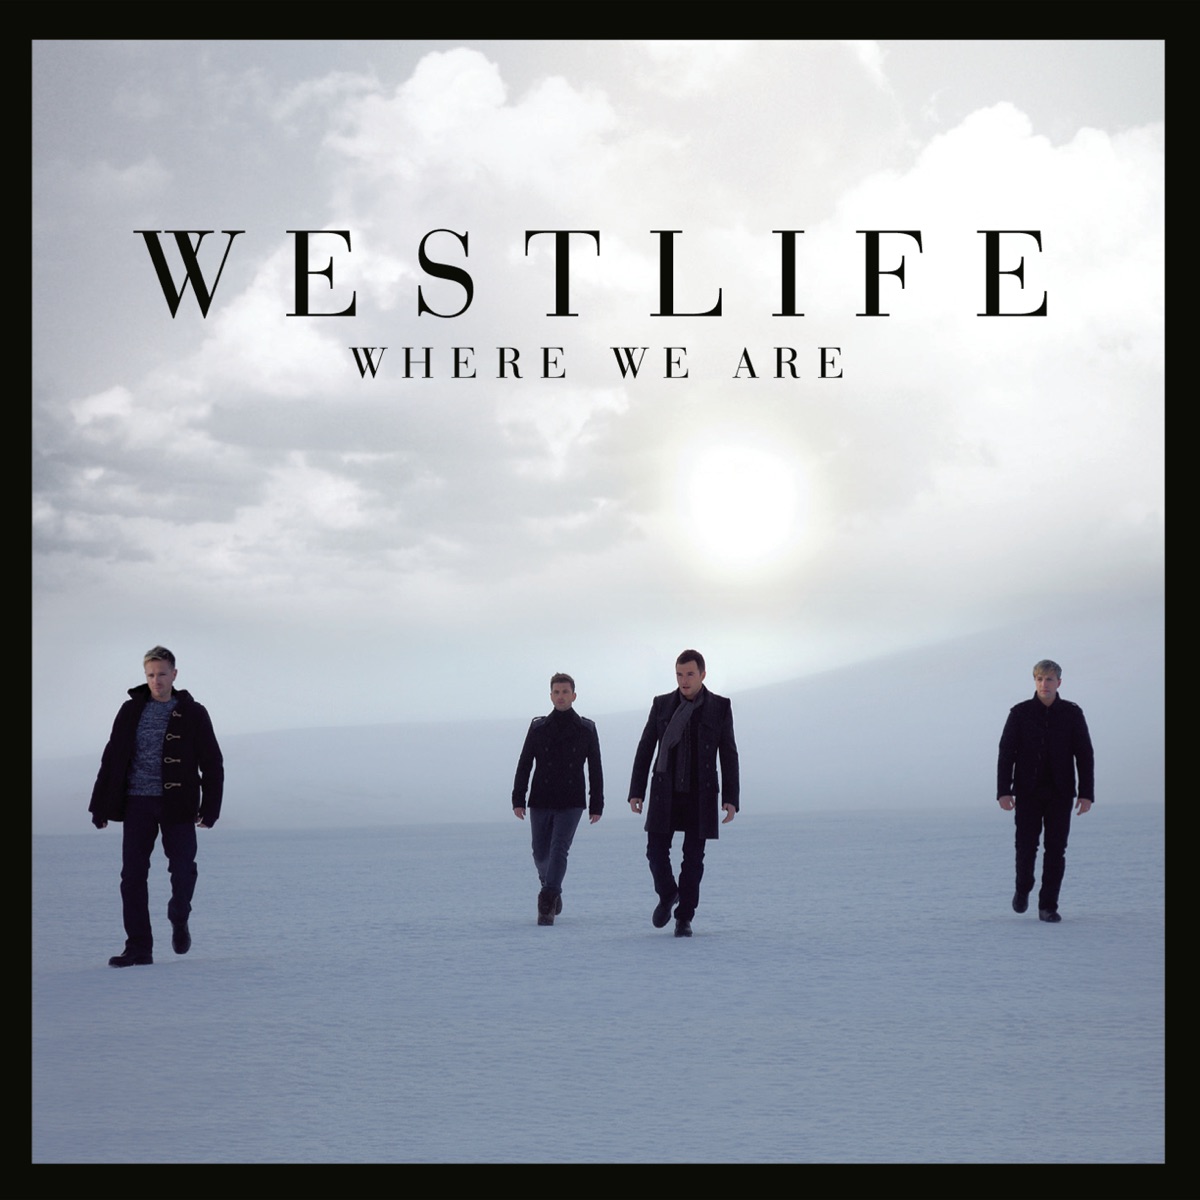 Westlife - Apple Music